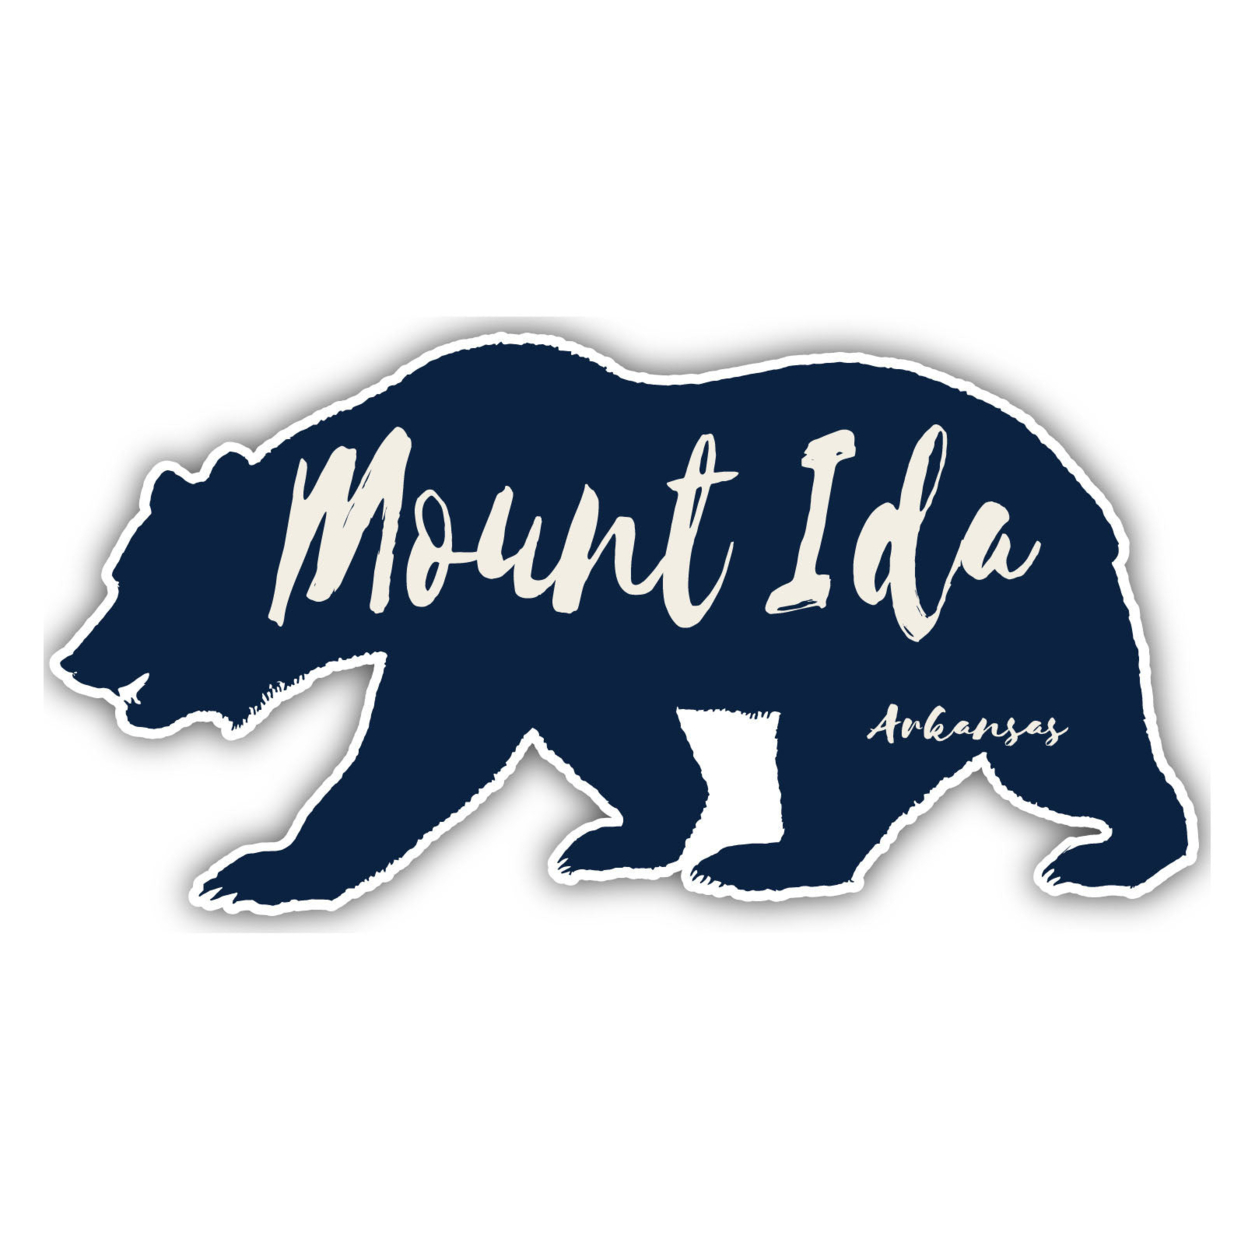 Mount Ida Arkansas Souvenir Decorative Stickers (Choose Theme And Size) - Single Unit, 4-Inch, Tent